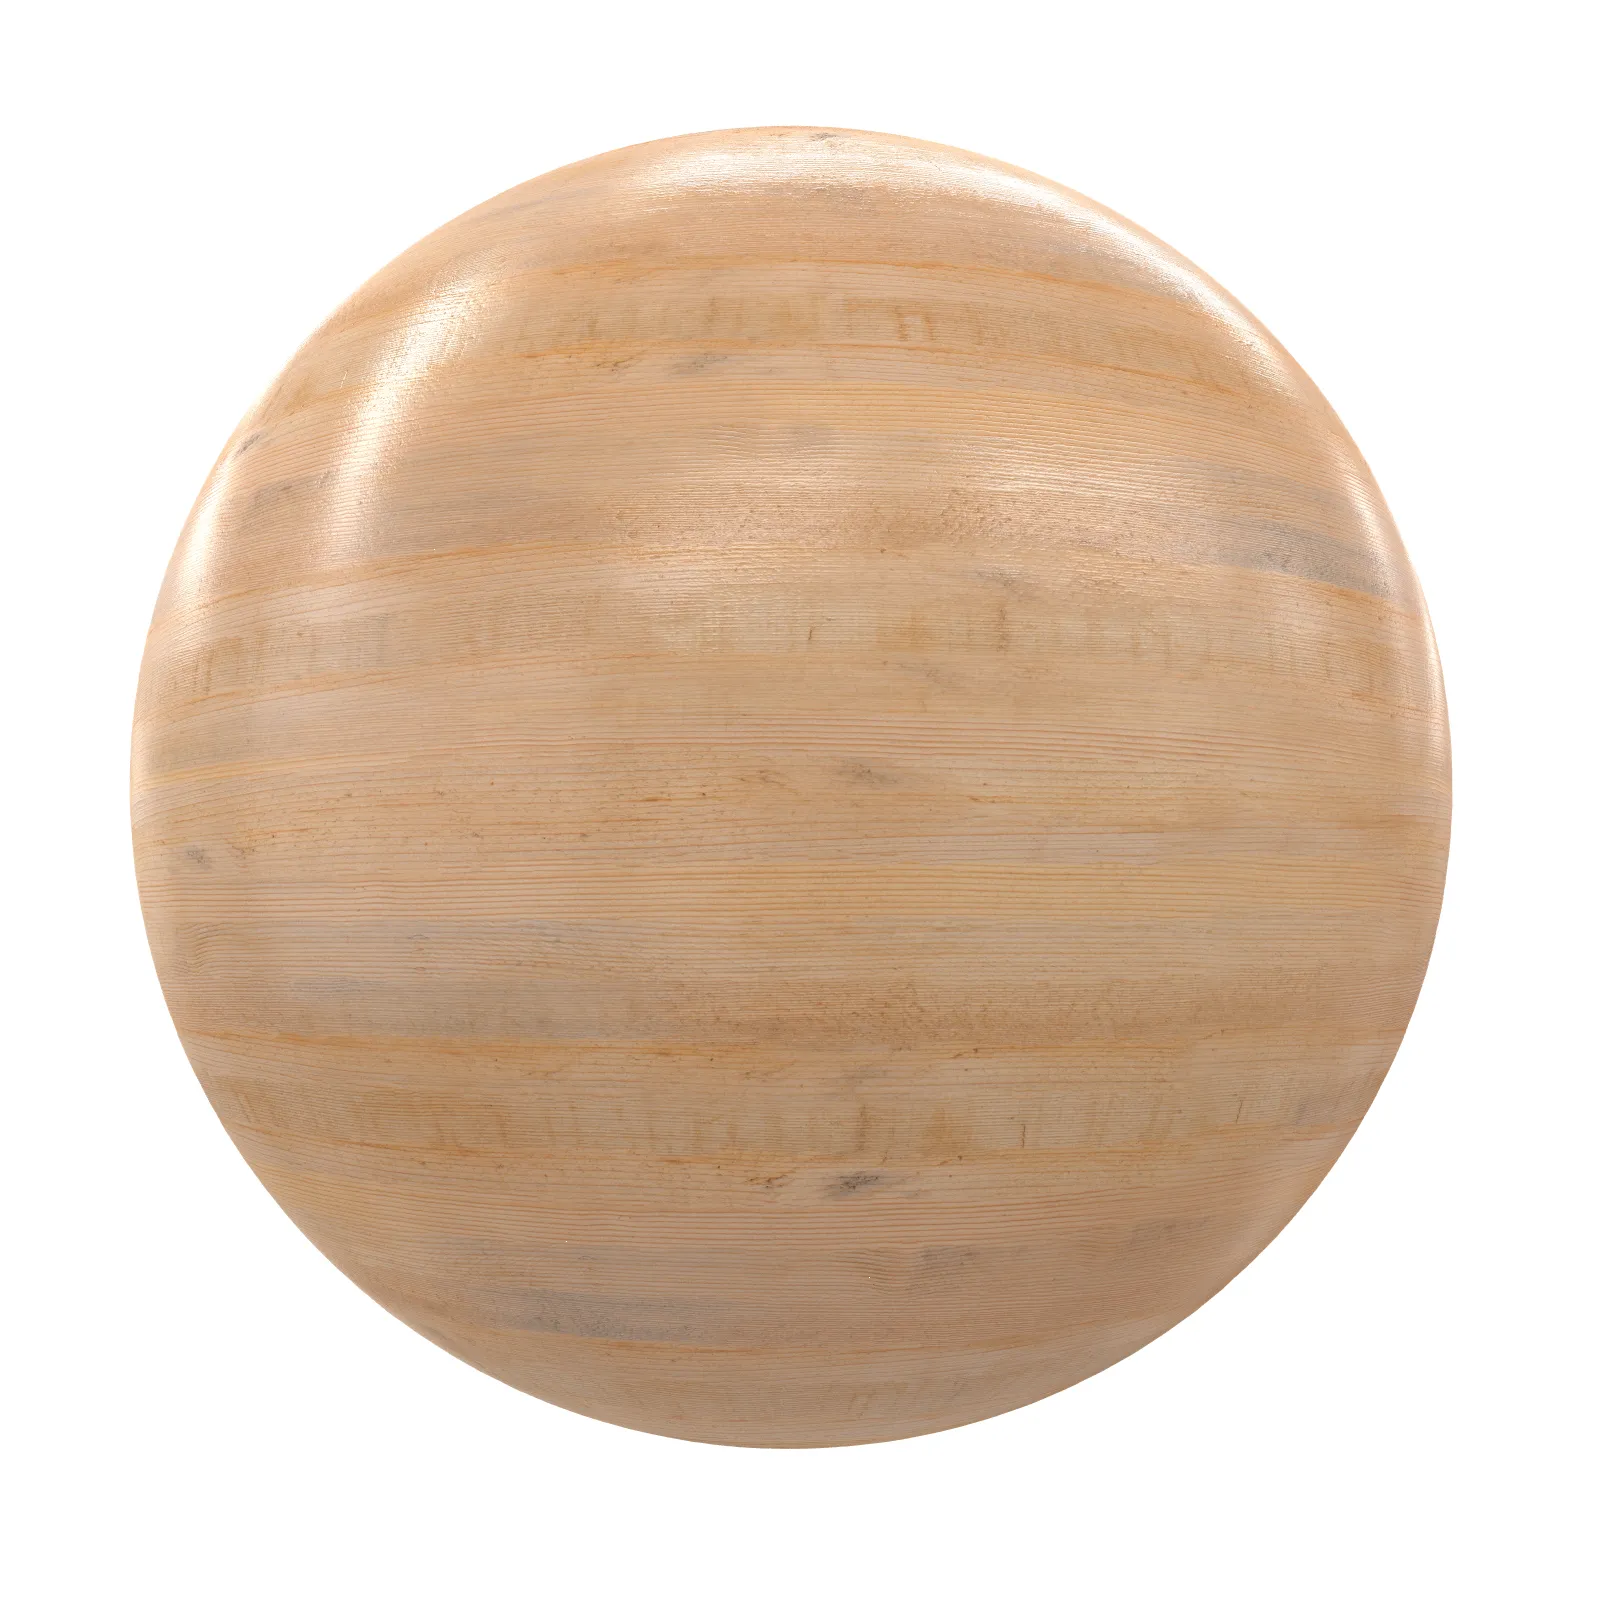 3ds Max Files – Texture – 8 – Wood Texture – 89 – Wood Texture by Minh Nguyen